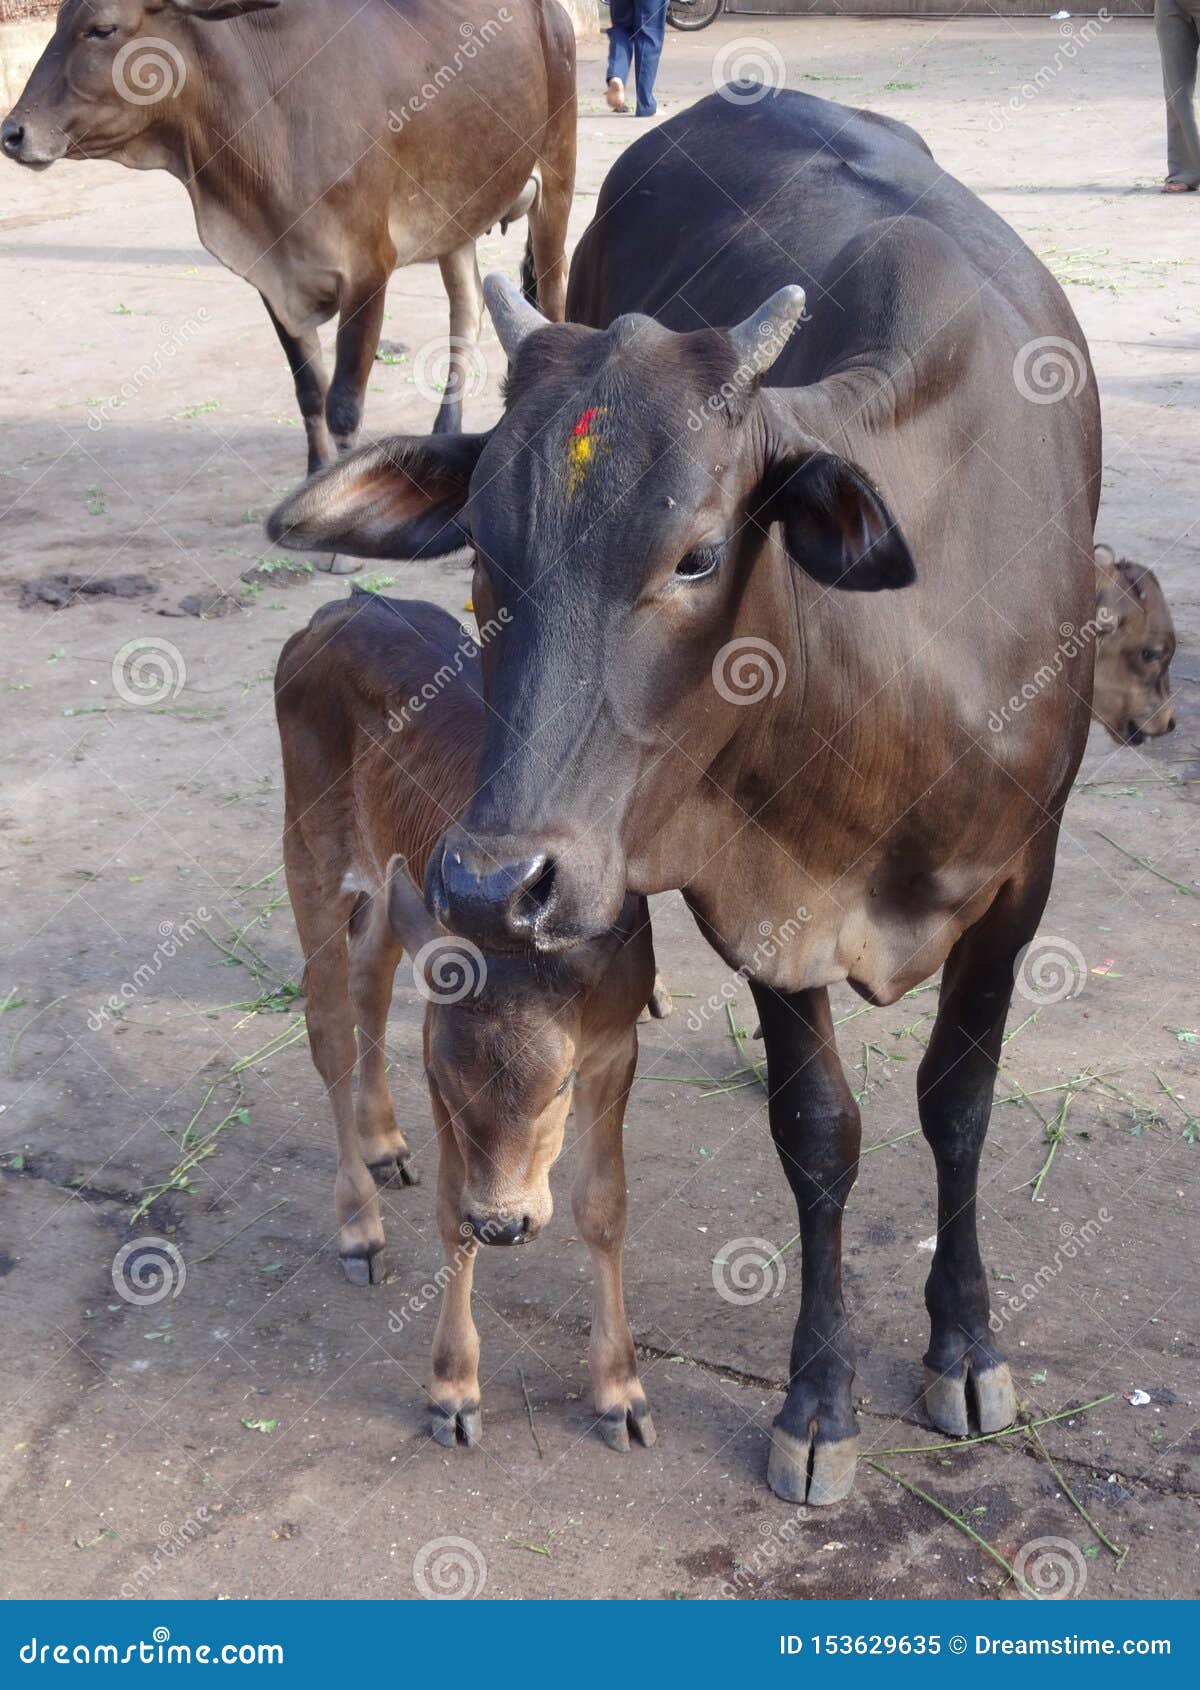 Indian Domestic Animala Calf and Cow Stock Image - Image of farm, farming:  153629635